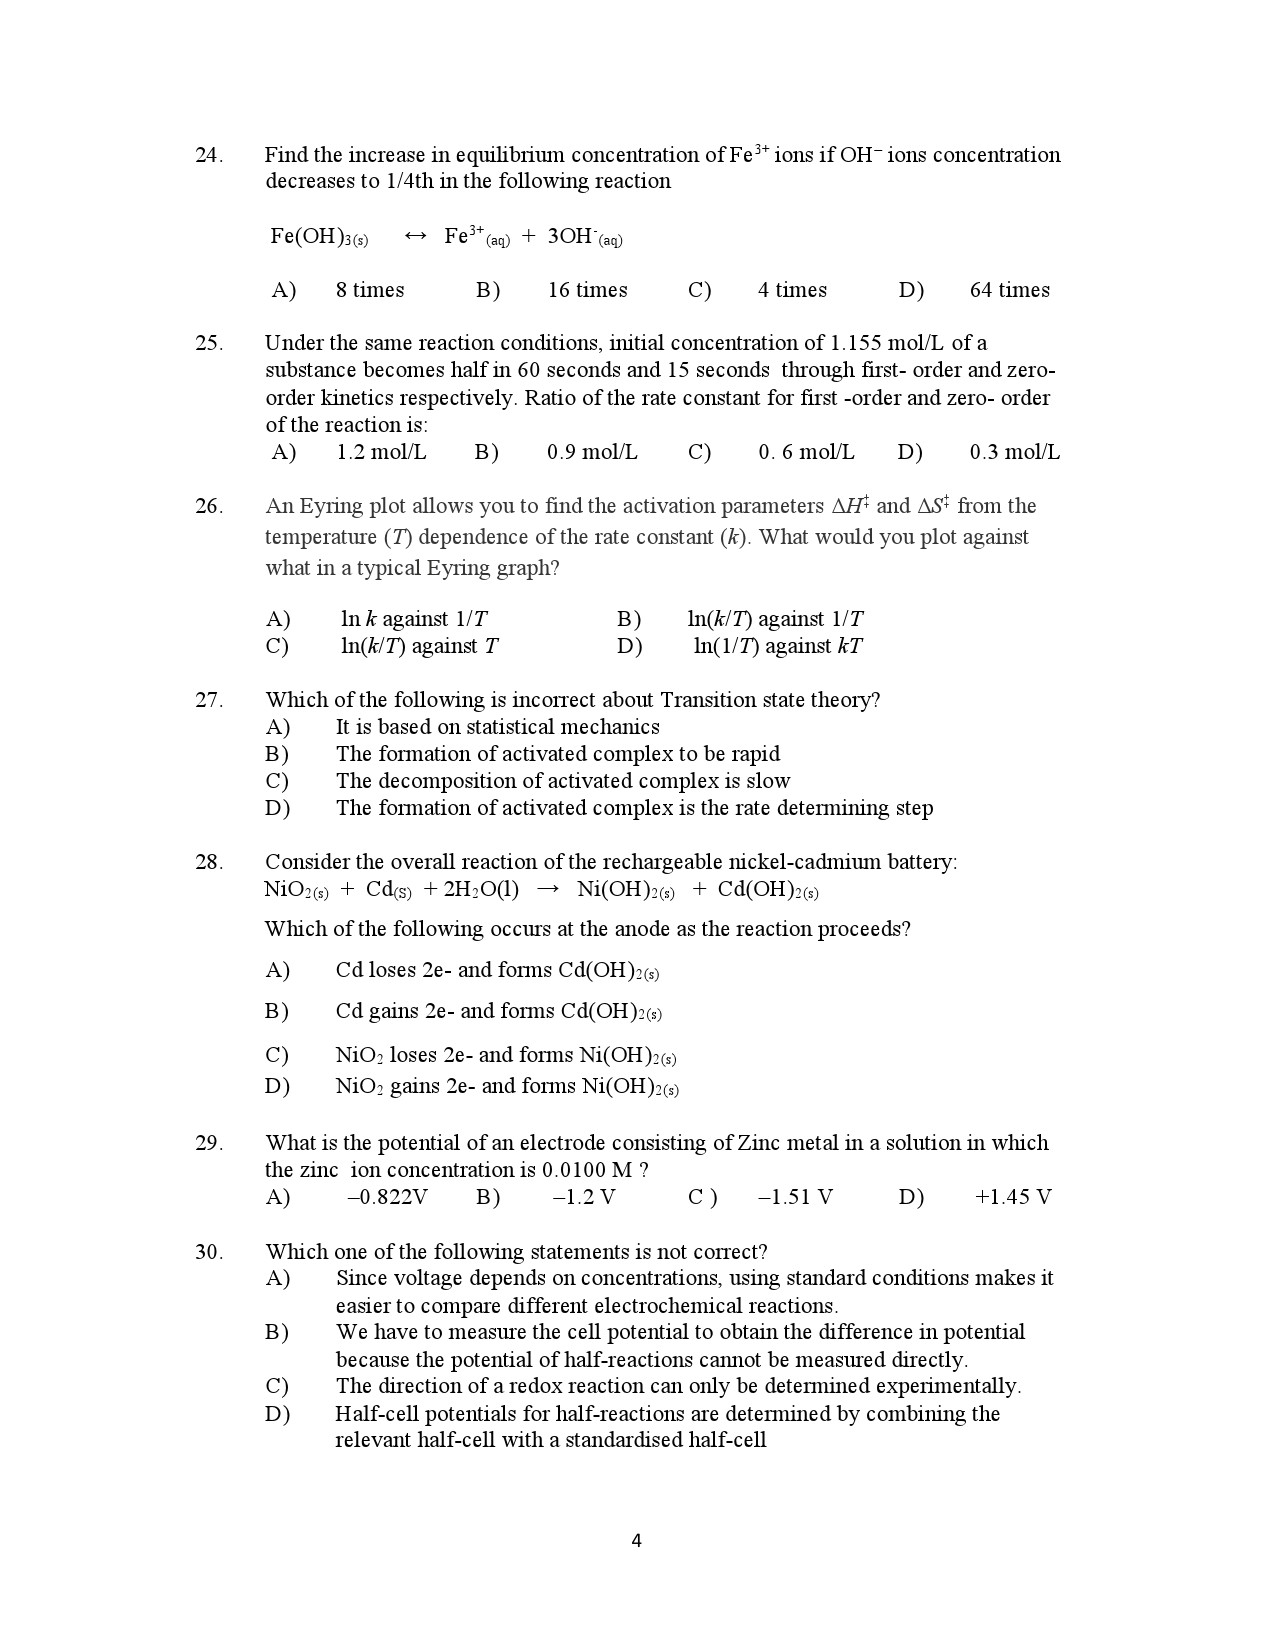 Kerala SET Chemistry Exam Question Paper July 2021 4